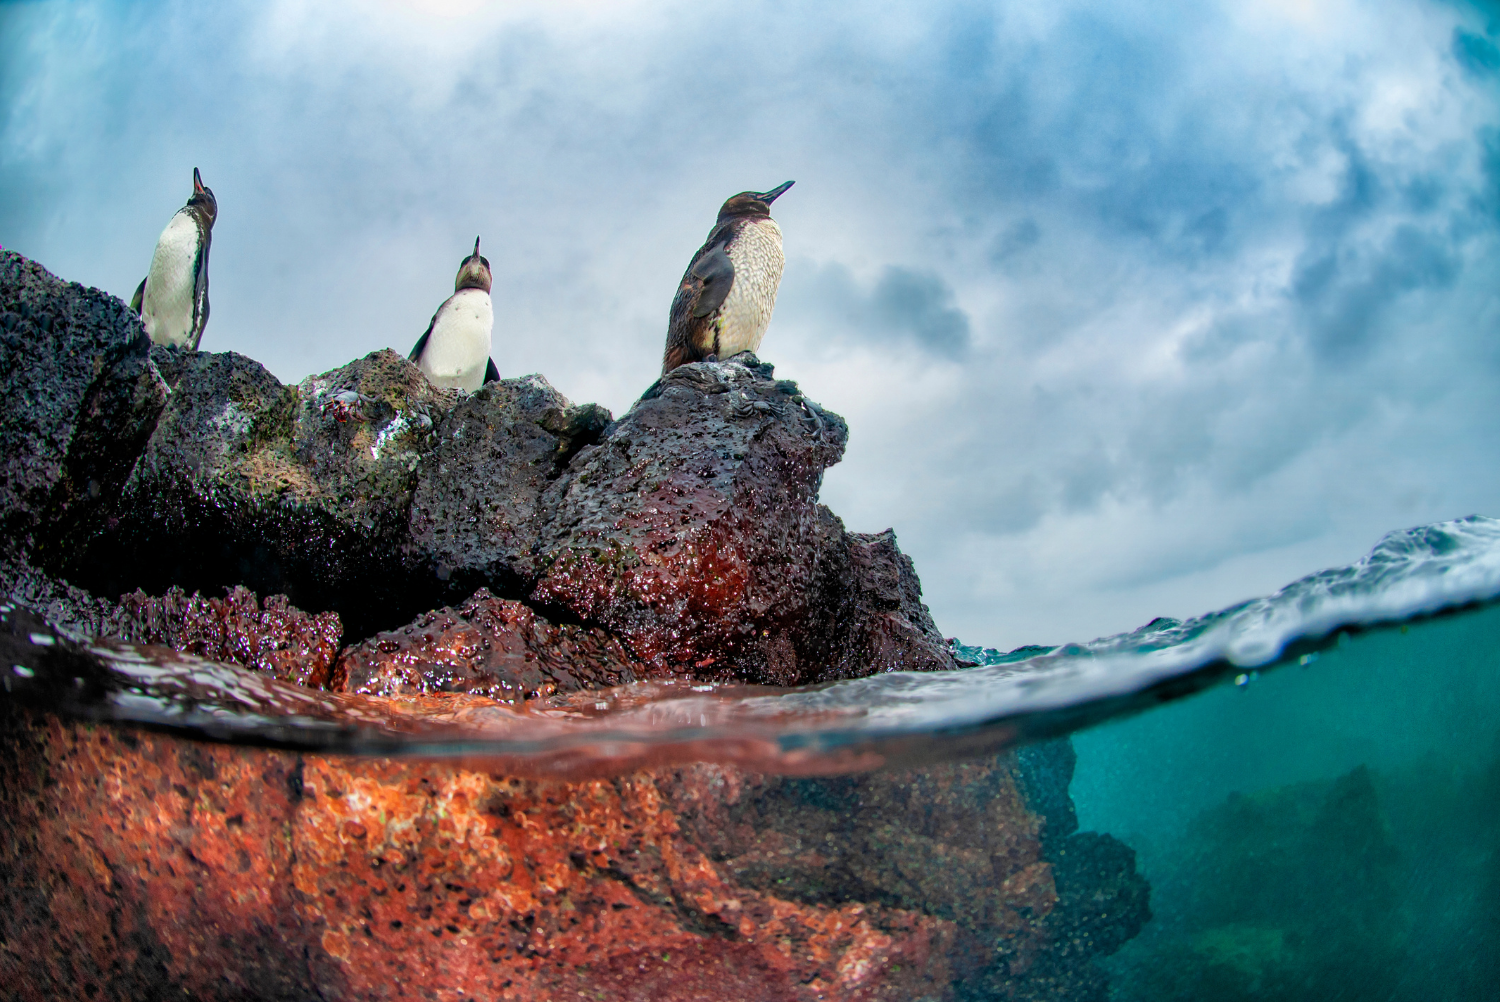 Galápagos penguins (Spheniscus mendiculus) in Los Túneles on Isabela Island, Galapagos, Ecuador